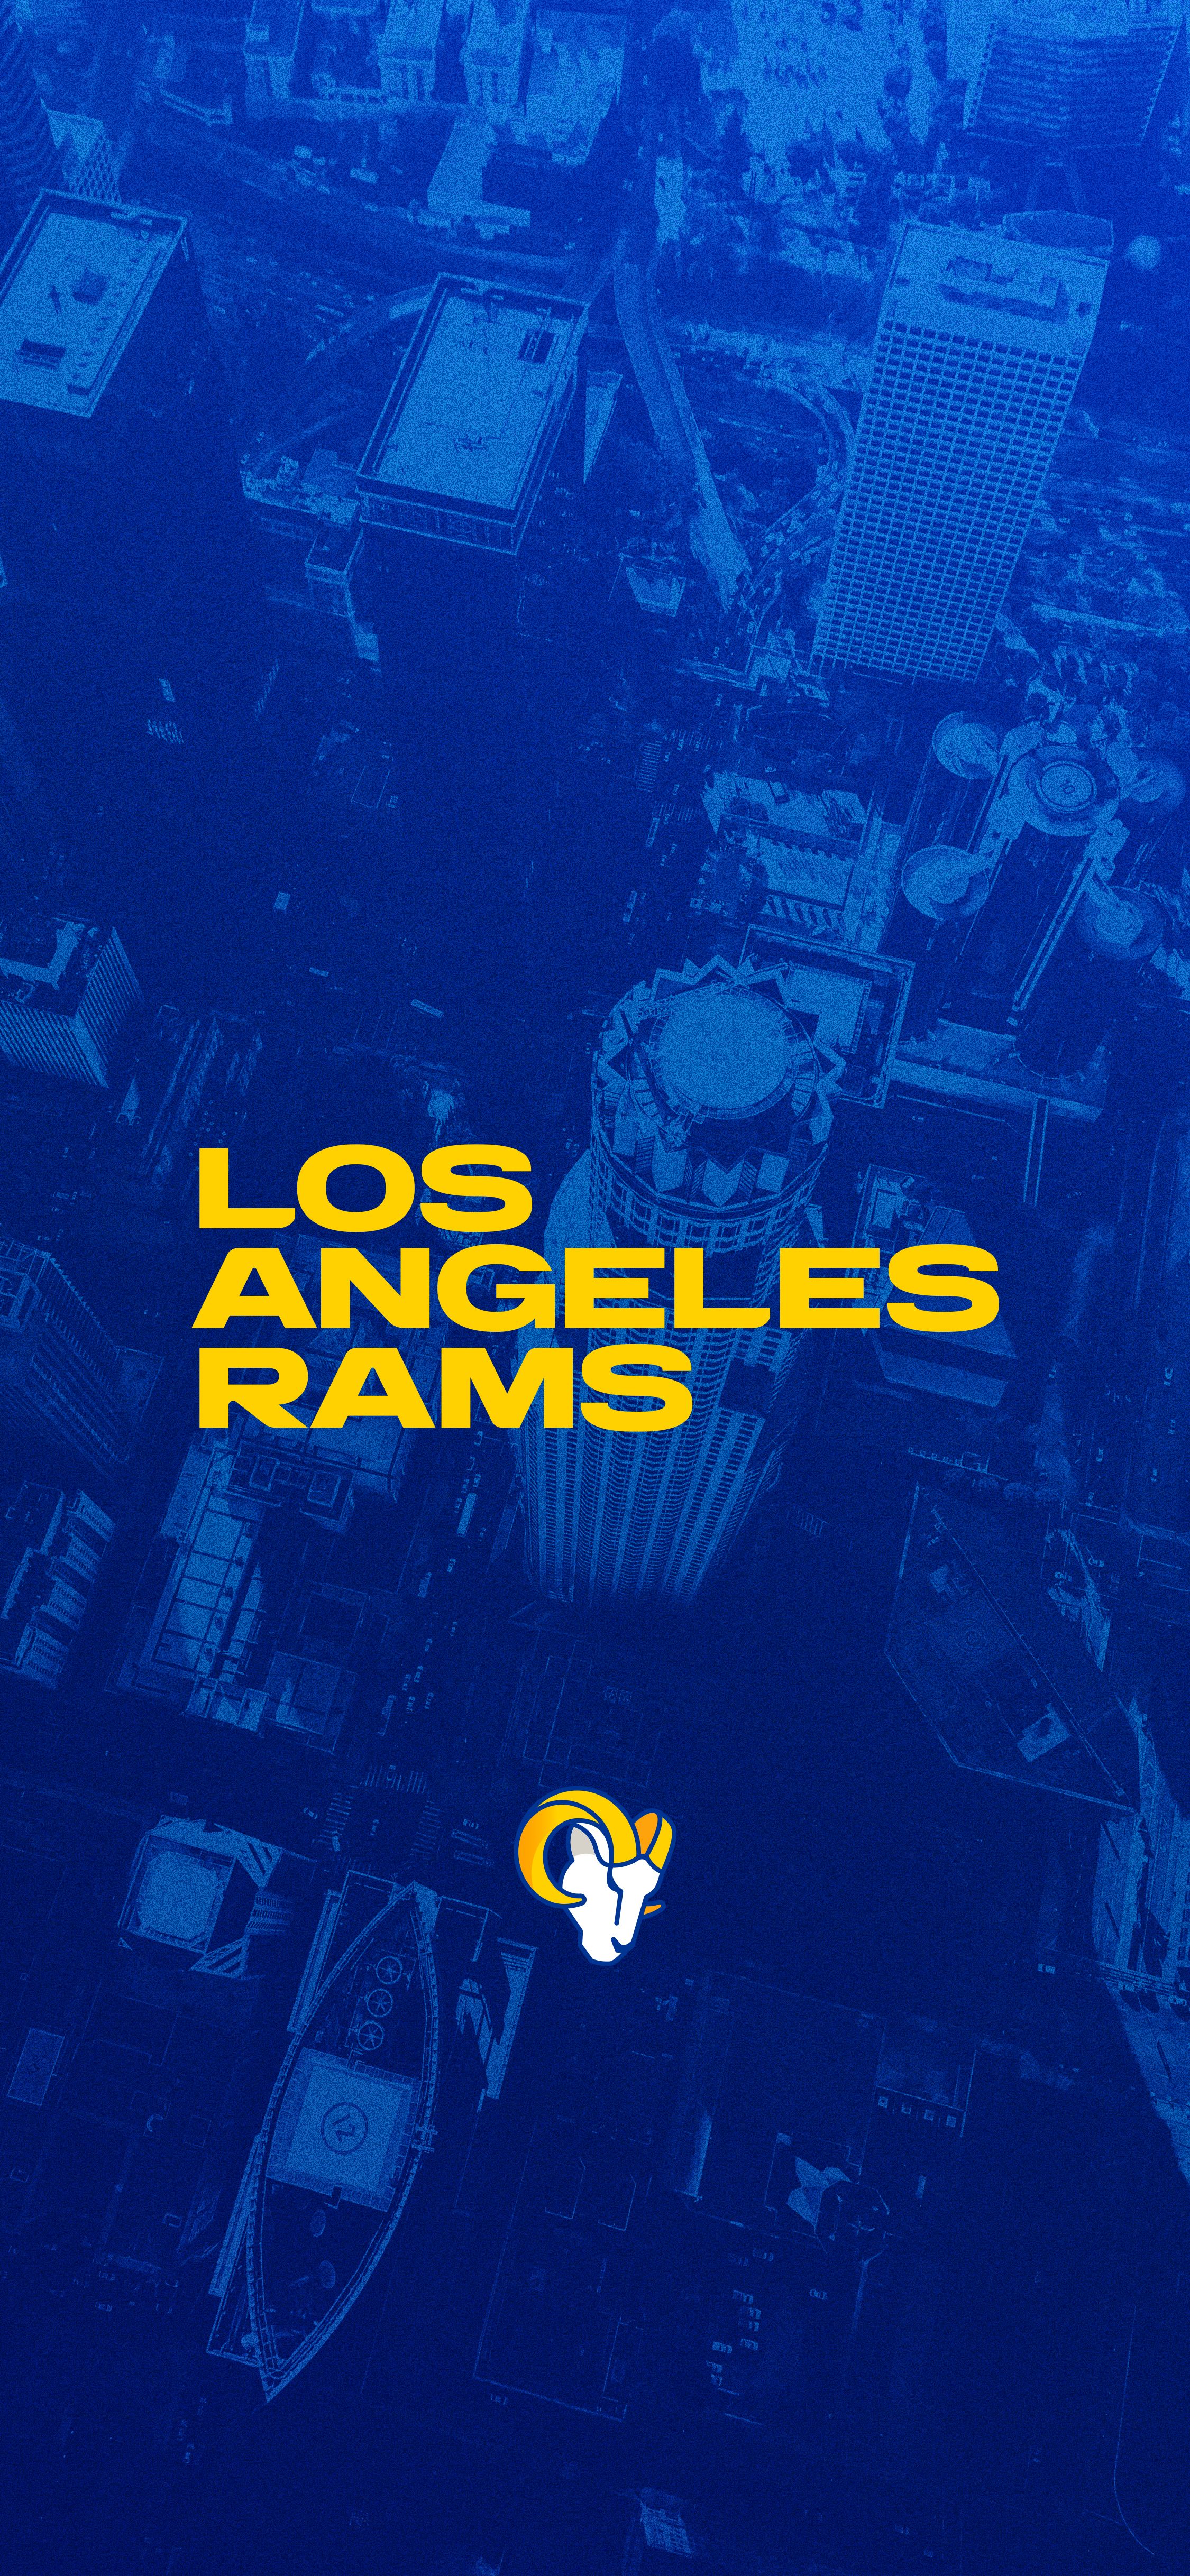 La Rams phone wallpaper I made : r/LosAngelesRams